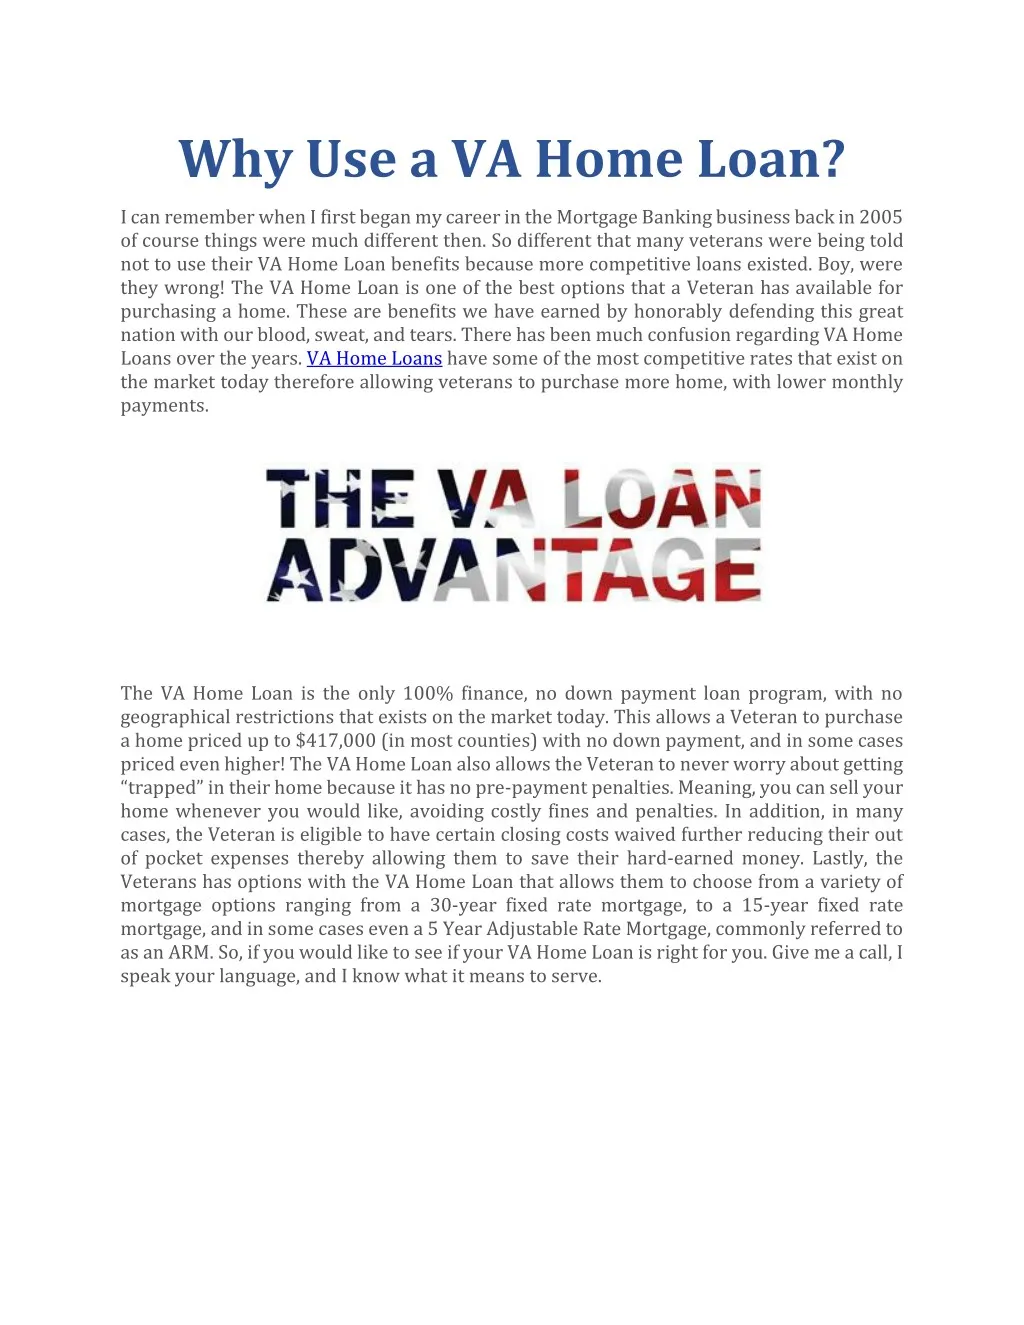 why use a va home loan